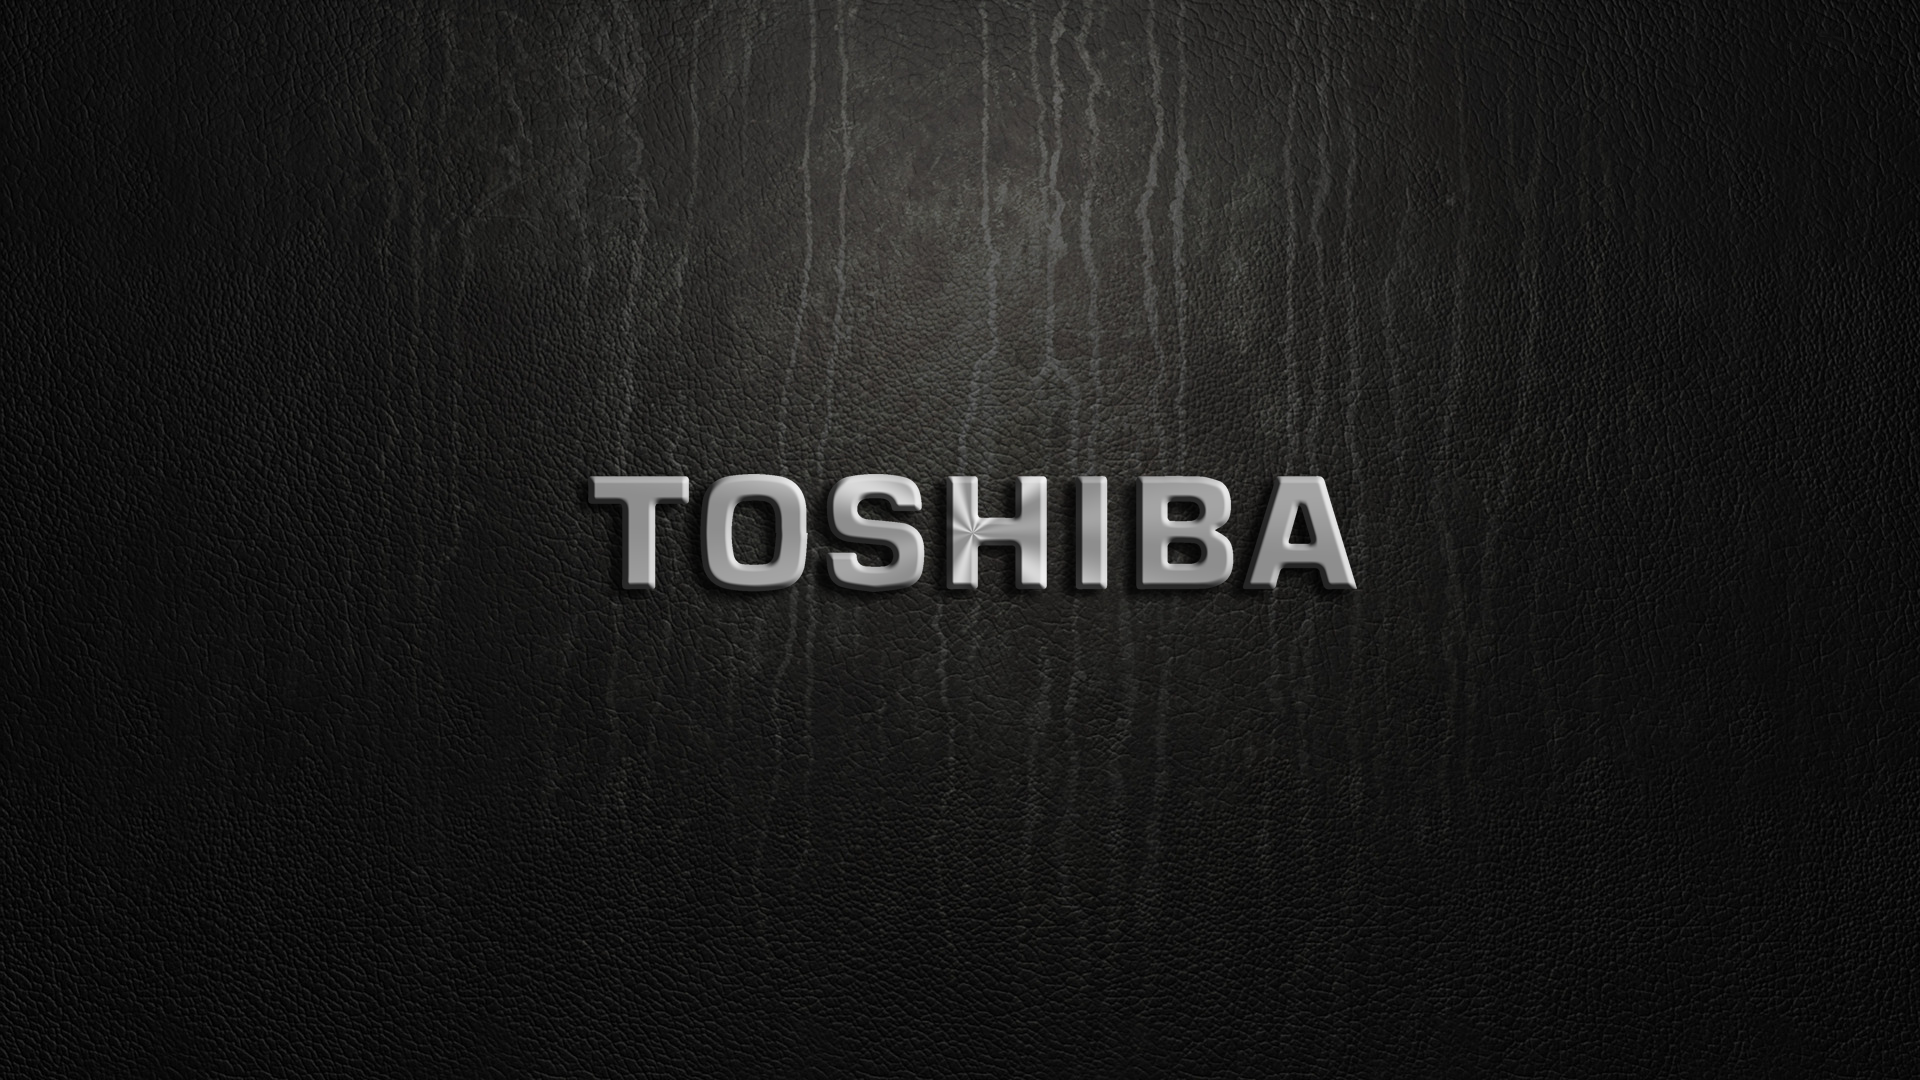 Pin Toshiba Wallpaper